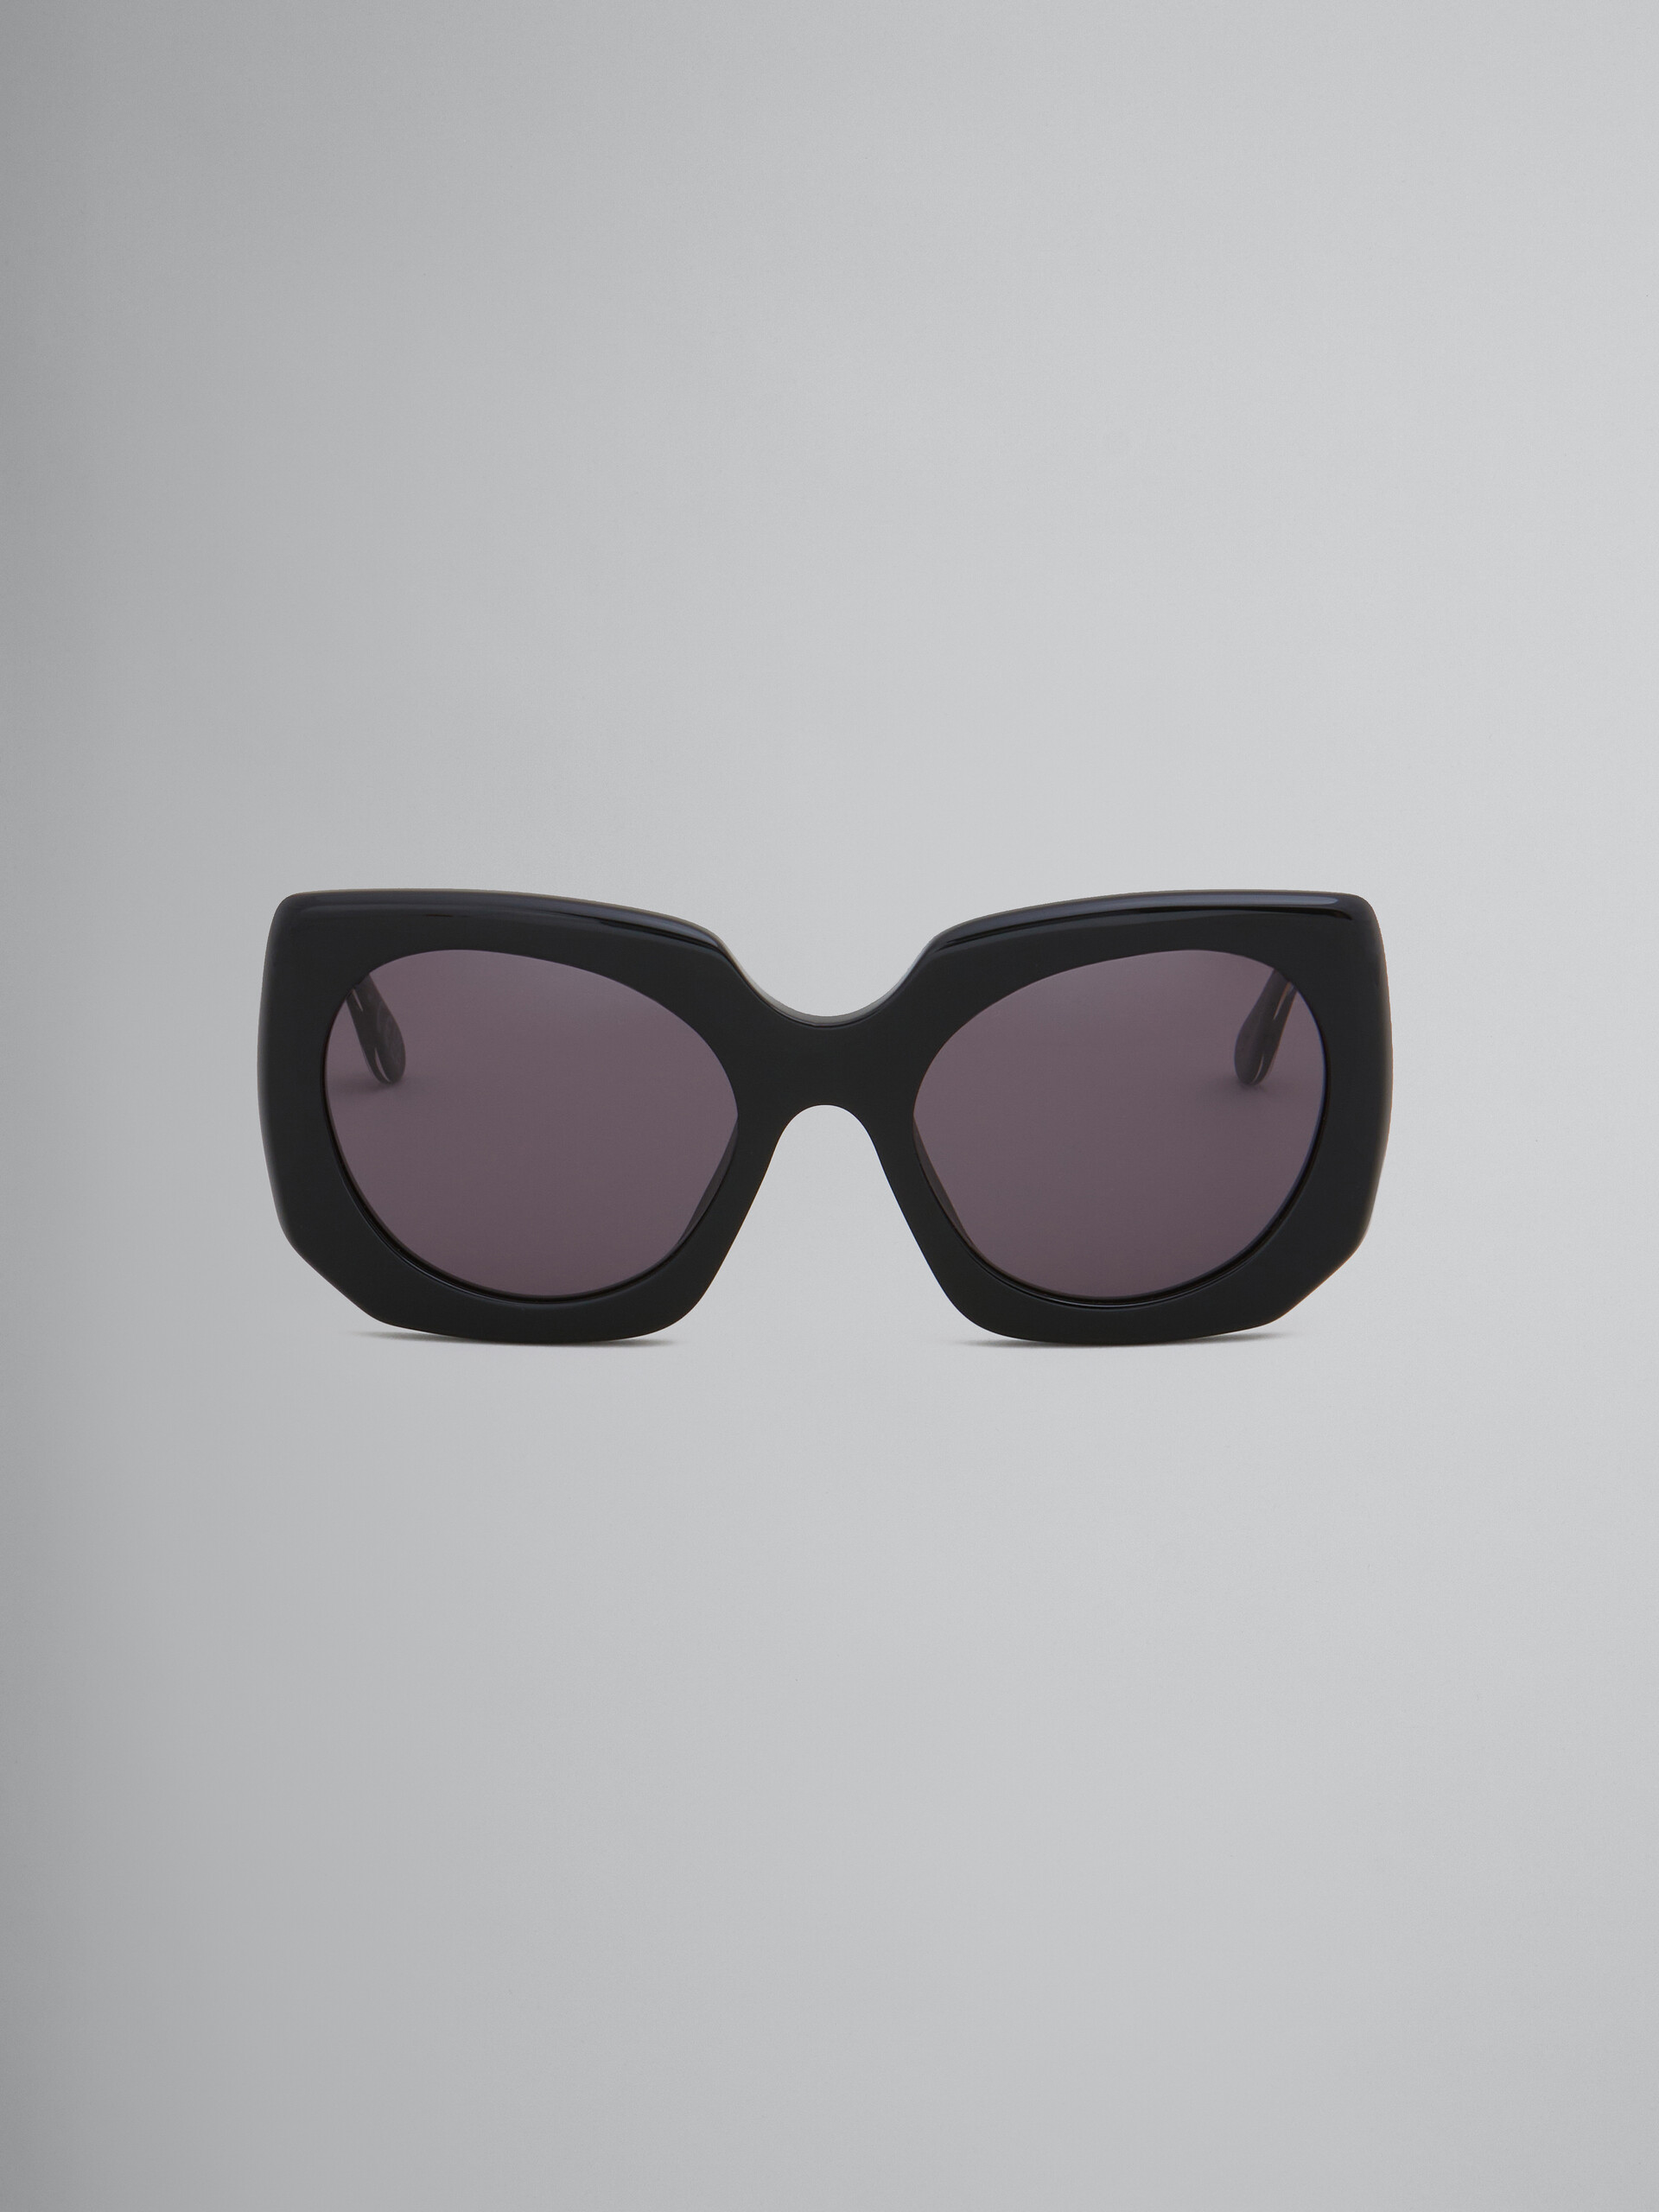 Jellyfish Lake black sunglasses - Optical - Image 1